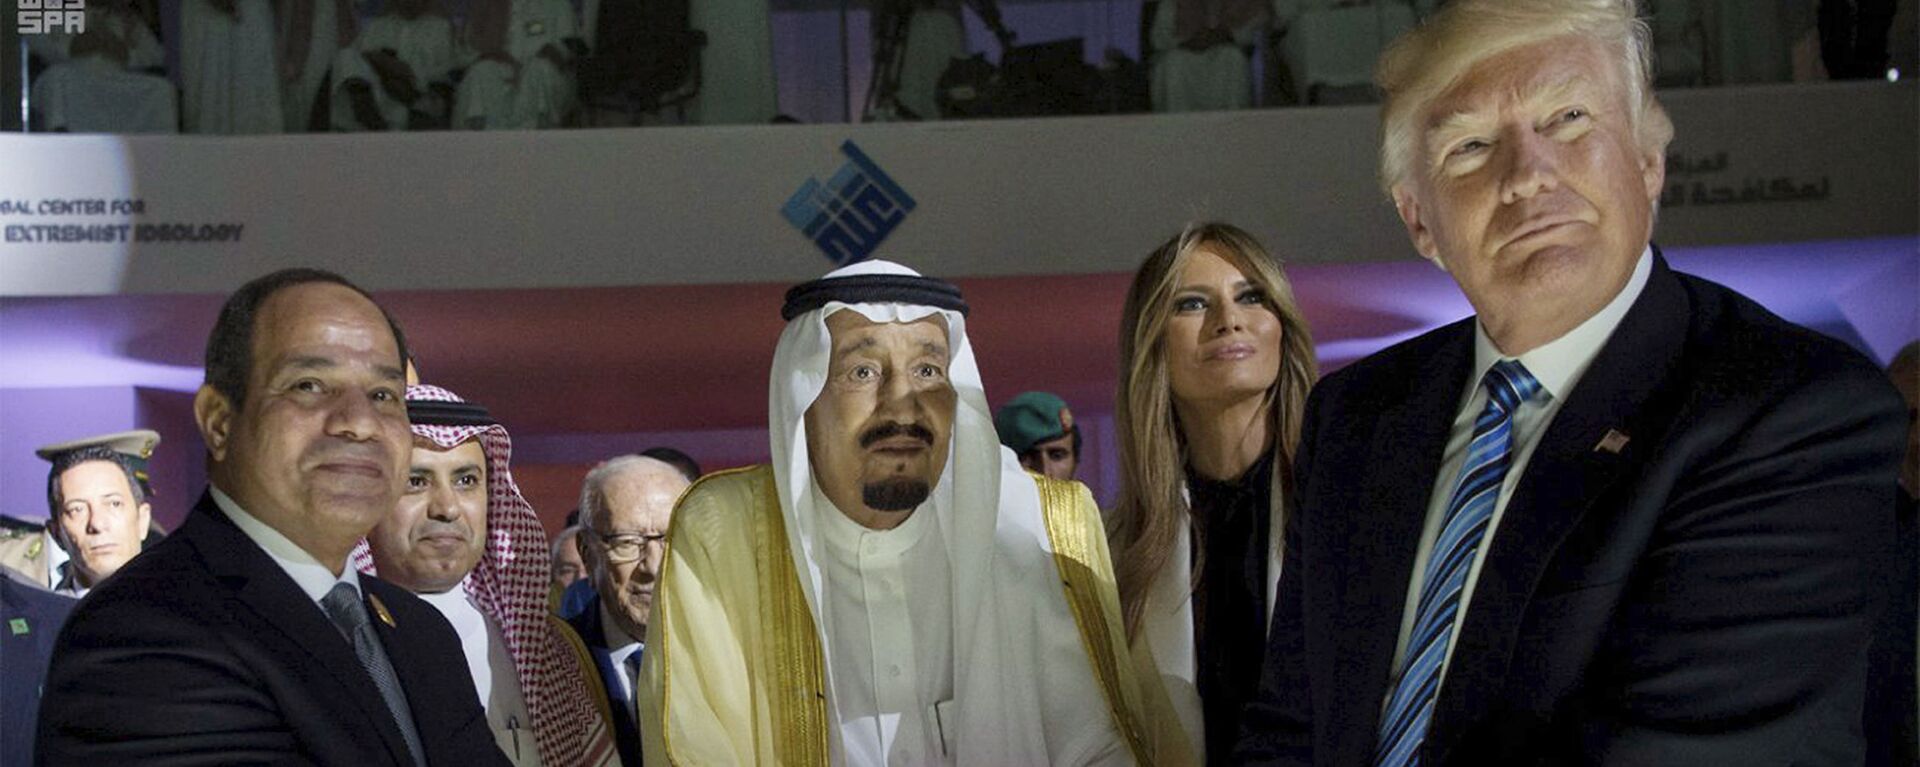 In this image from 21 May 2017, US President Donald Trump, Egyptian President Abdel Fattah el-Sisi, and Saudi King Salman, grasp an orb during a forum in Riyadh. - Sputnik International, 1920, 09.05.2021